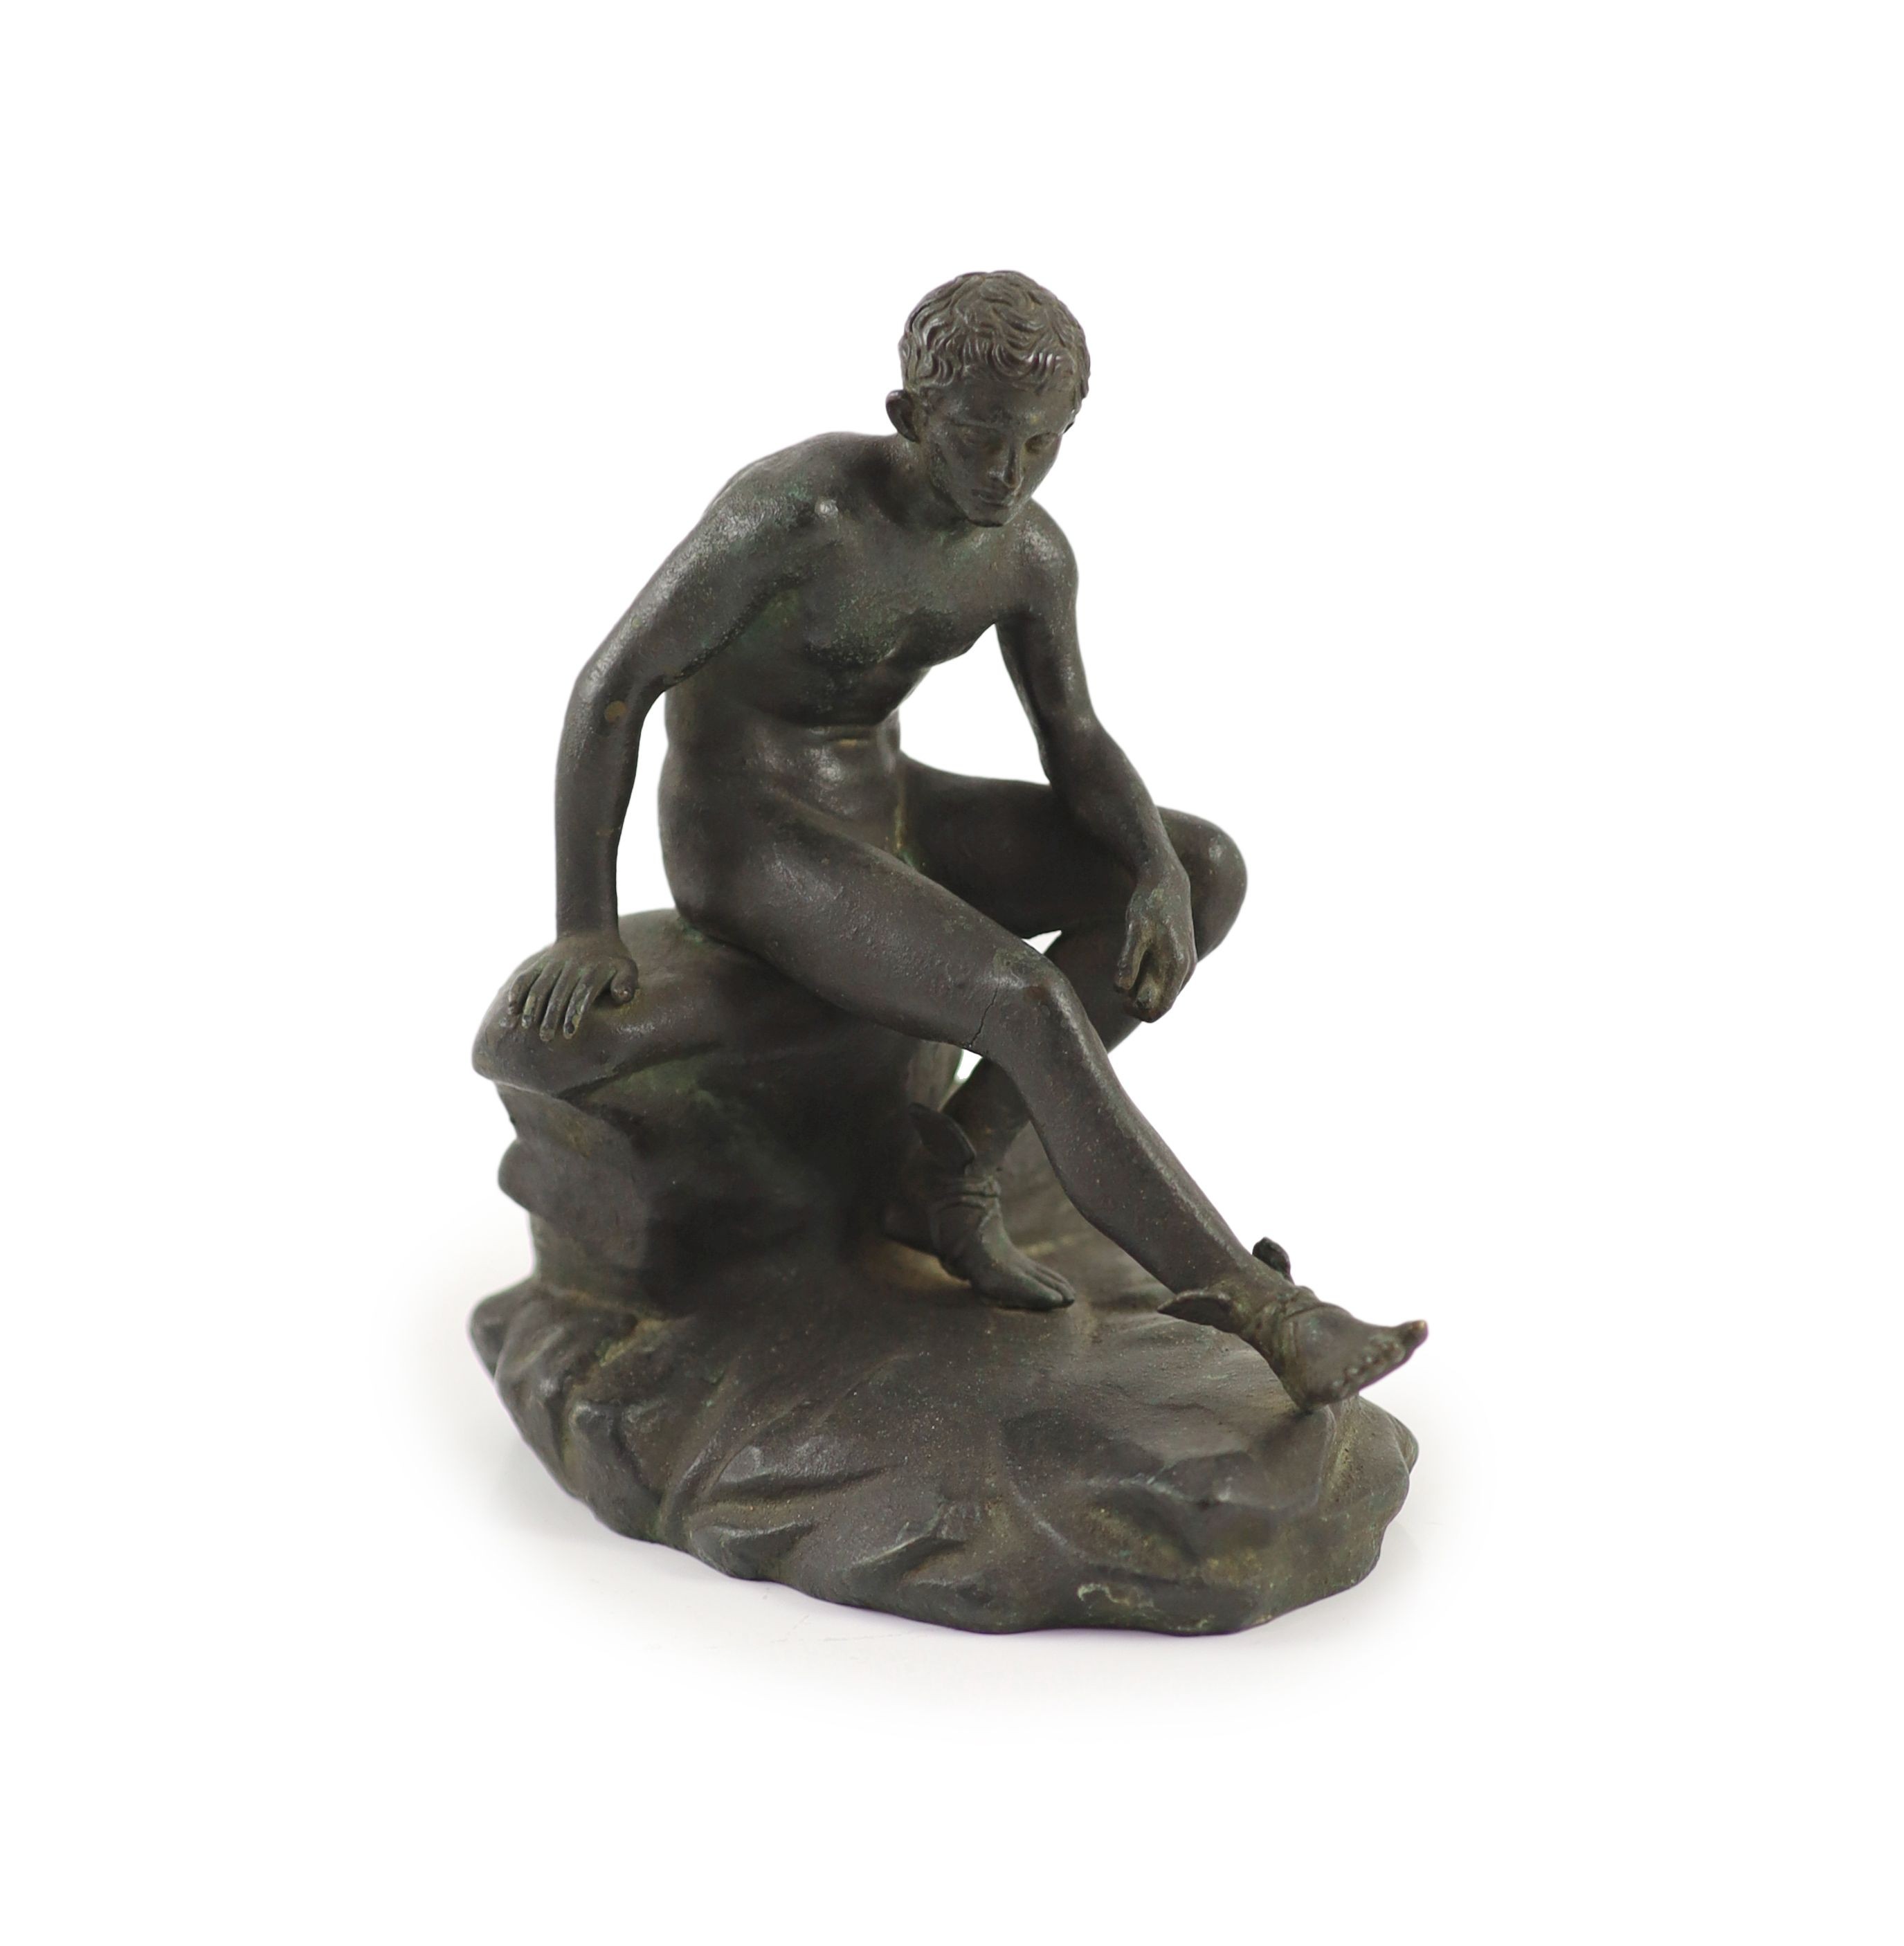 After the Antique, a Grand Tour bronze figure of Hermes H 19cm. W 19cm.